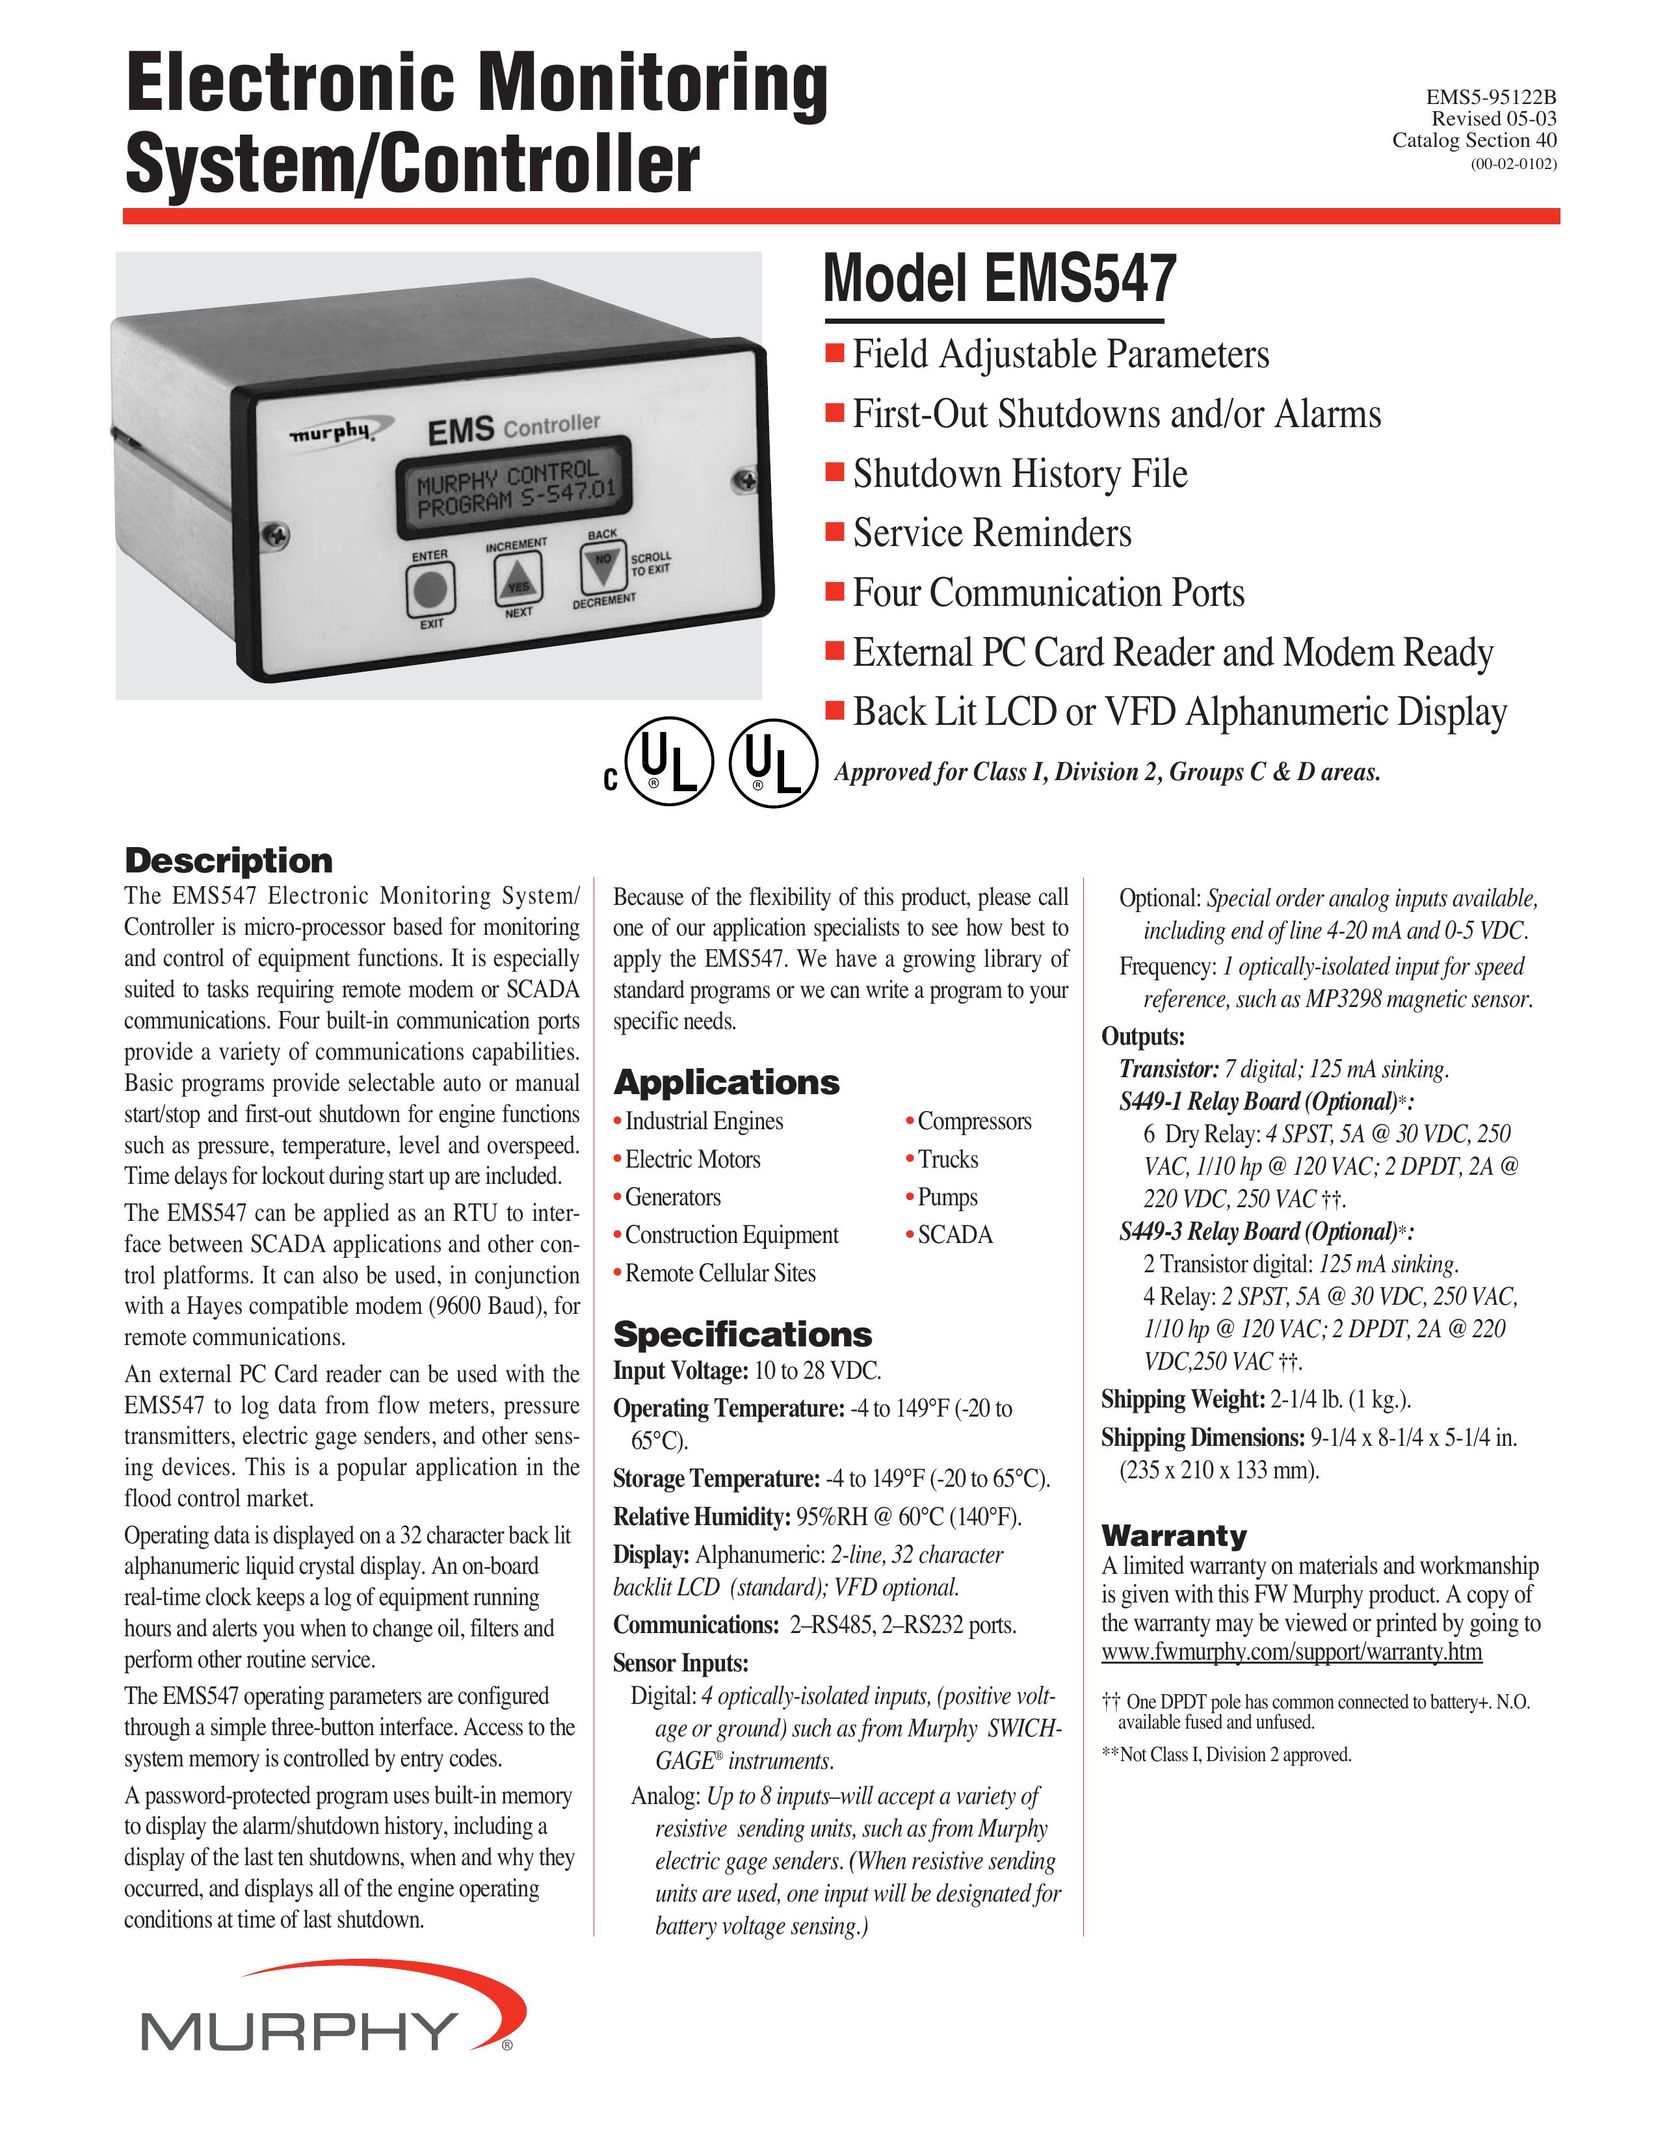 Murphy EMS547 Network Card User Manual